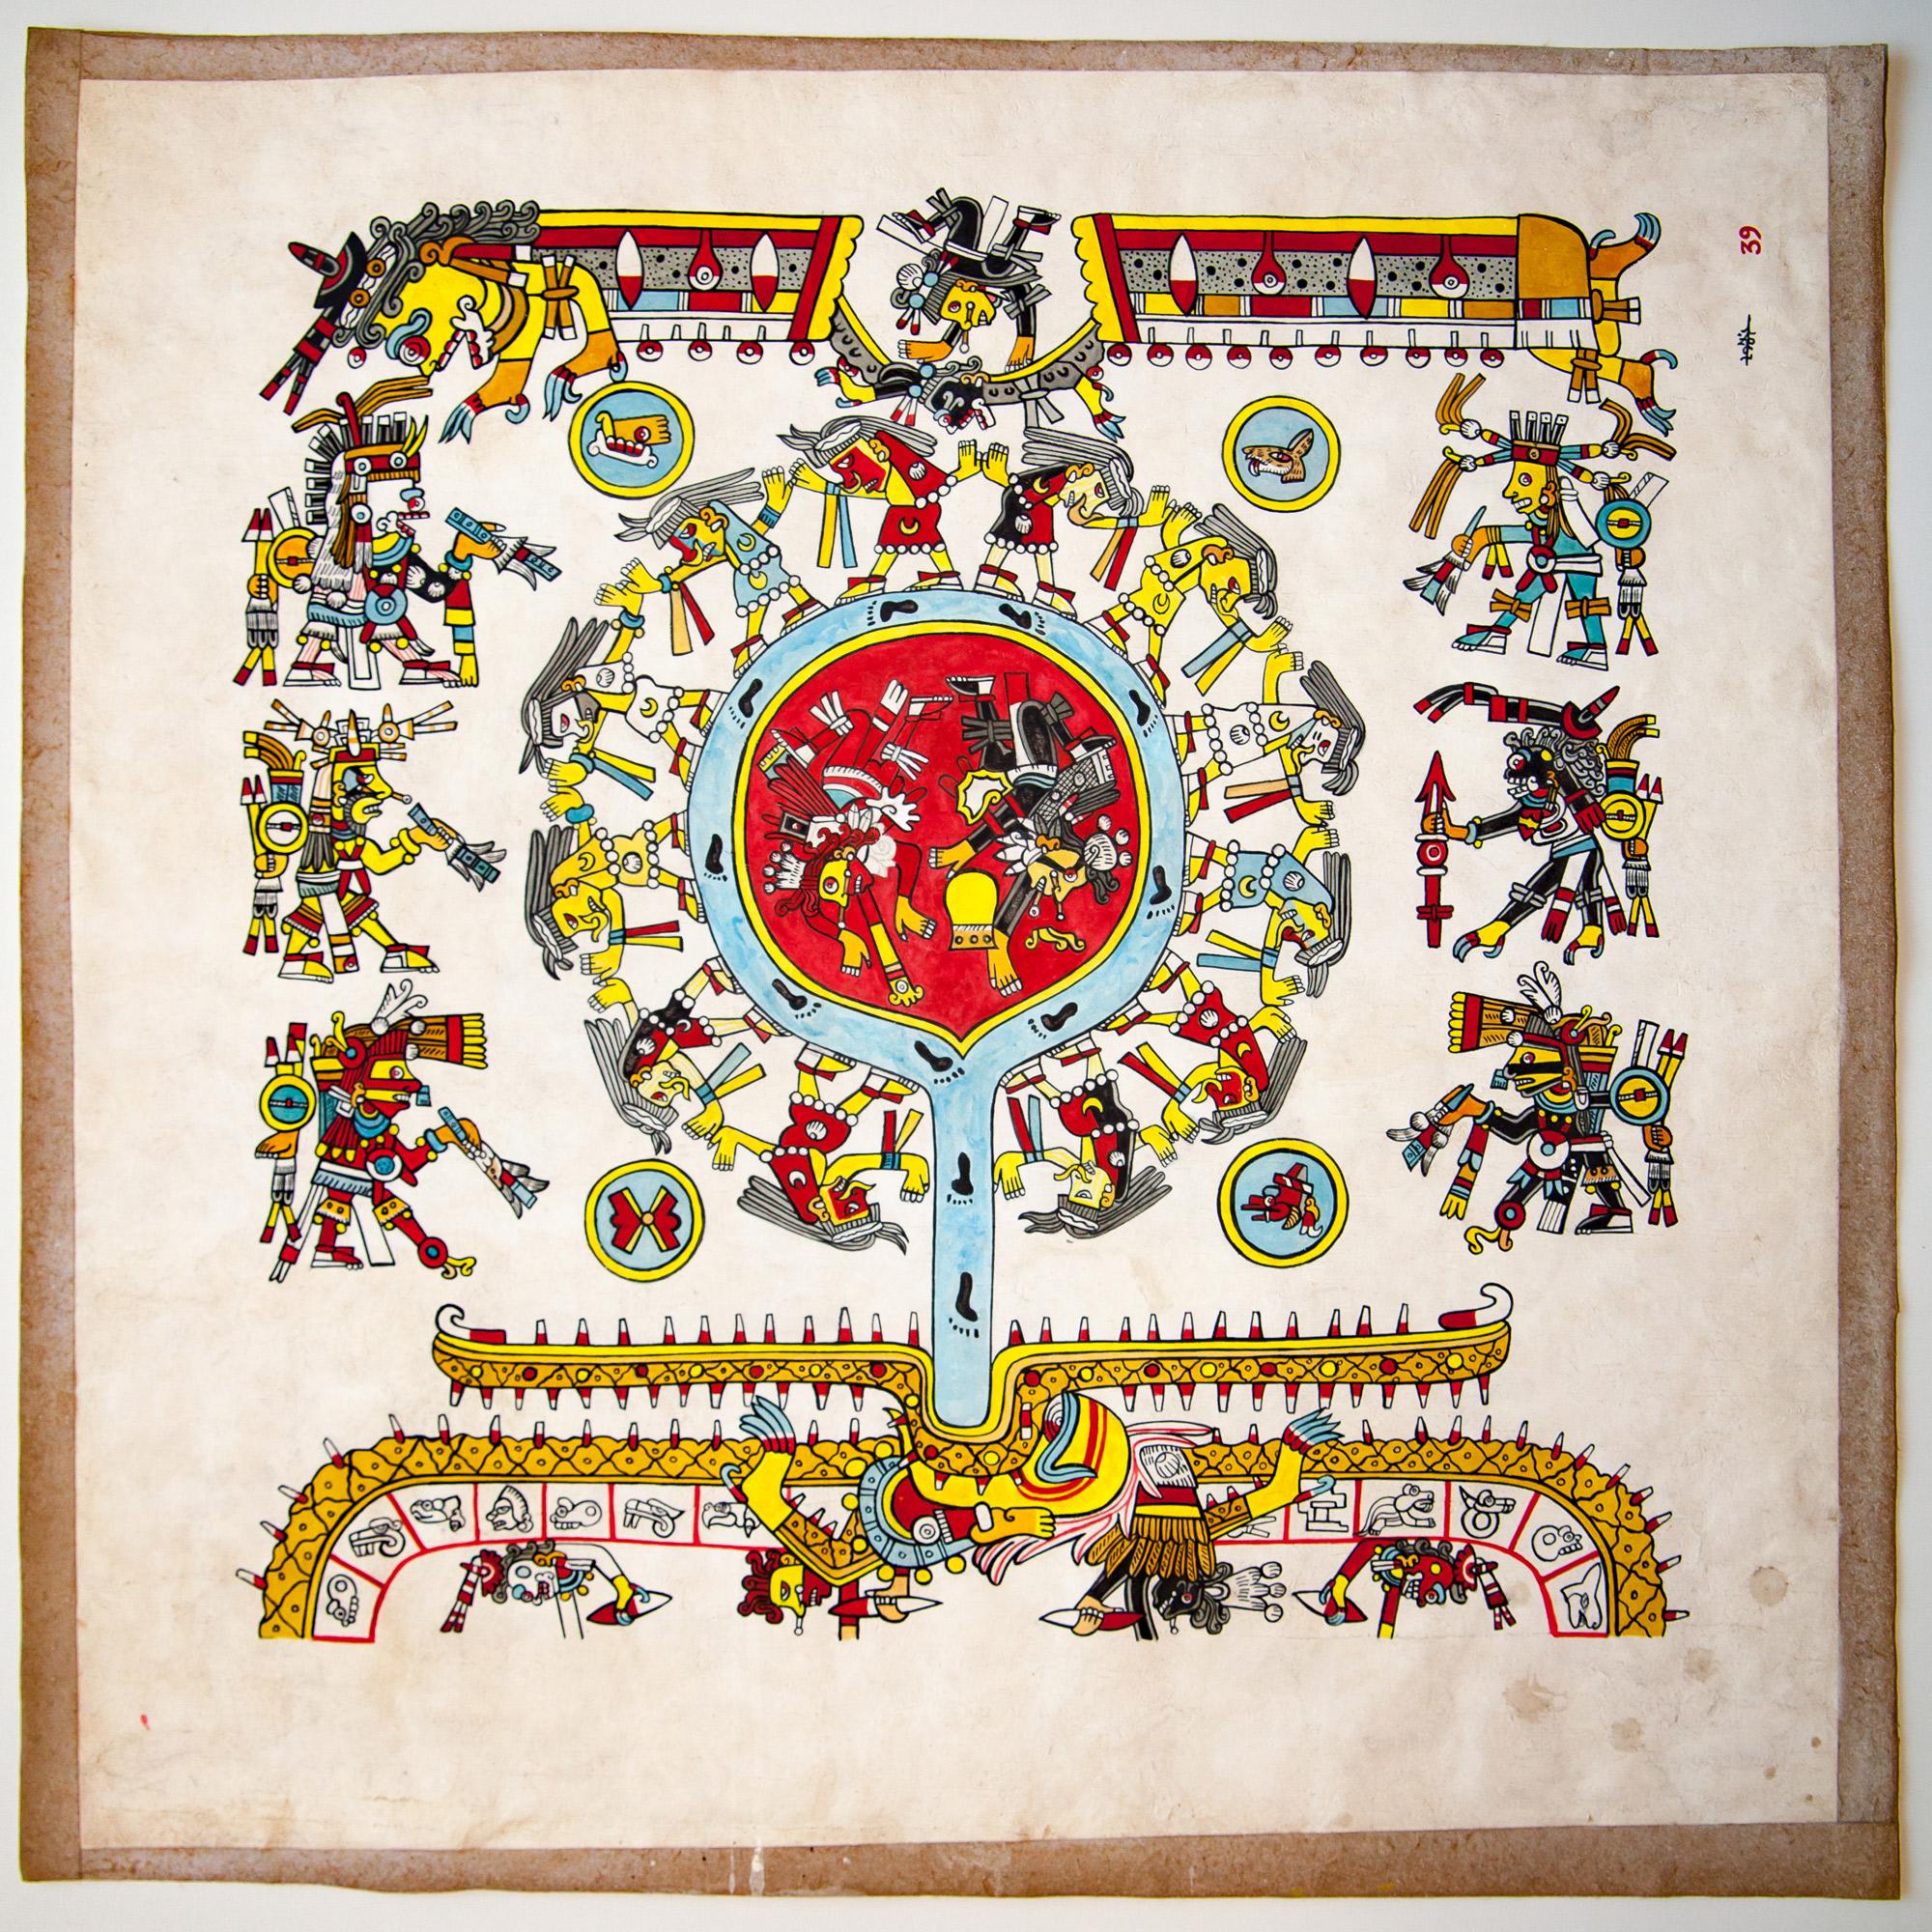 A tile from the Codex Borgia